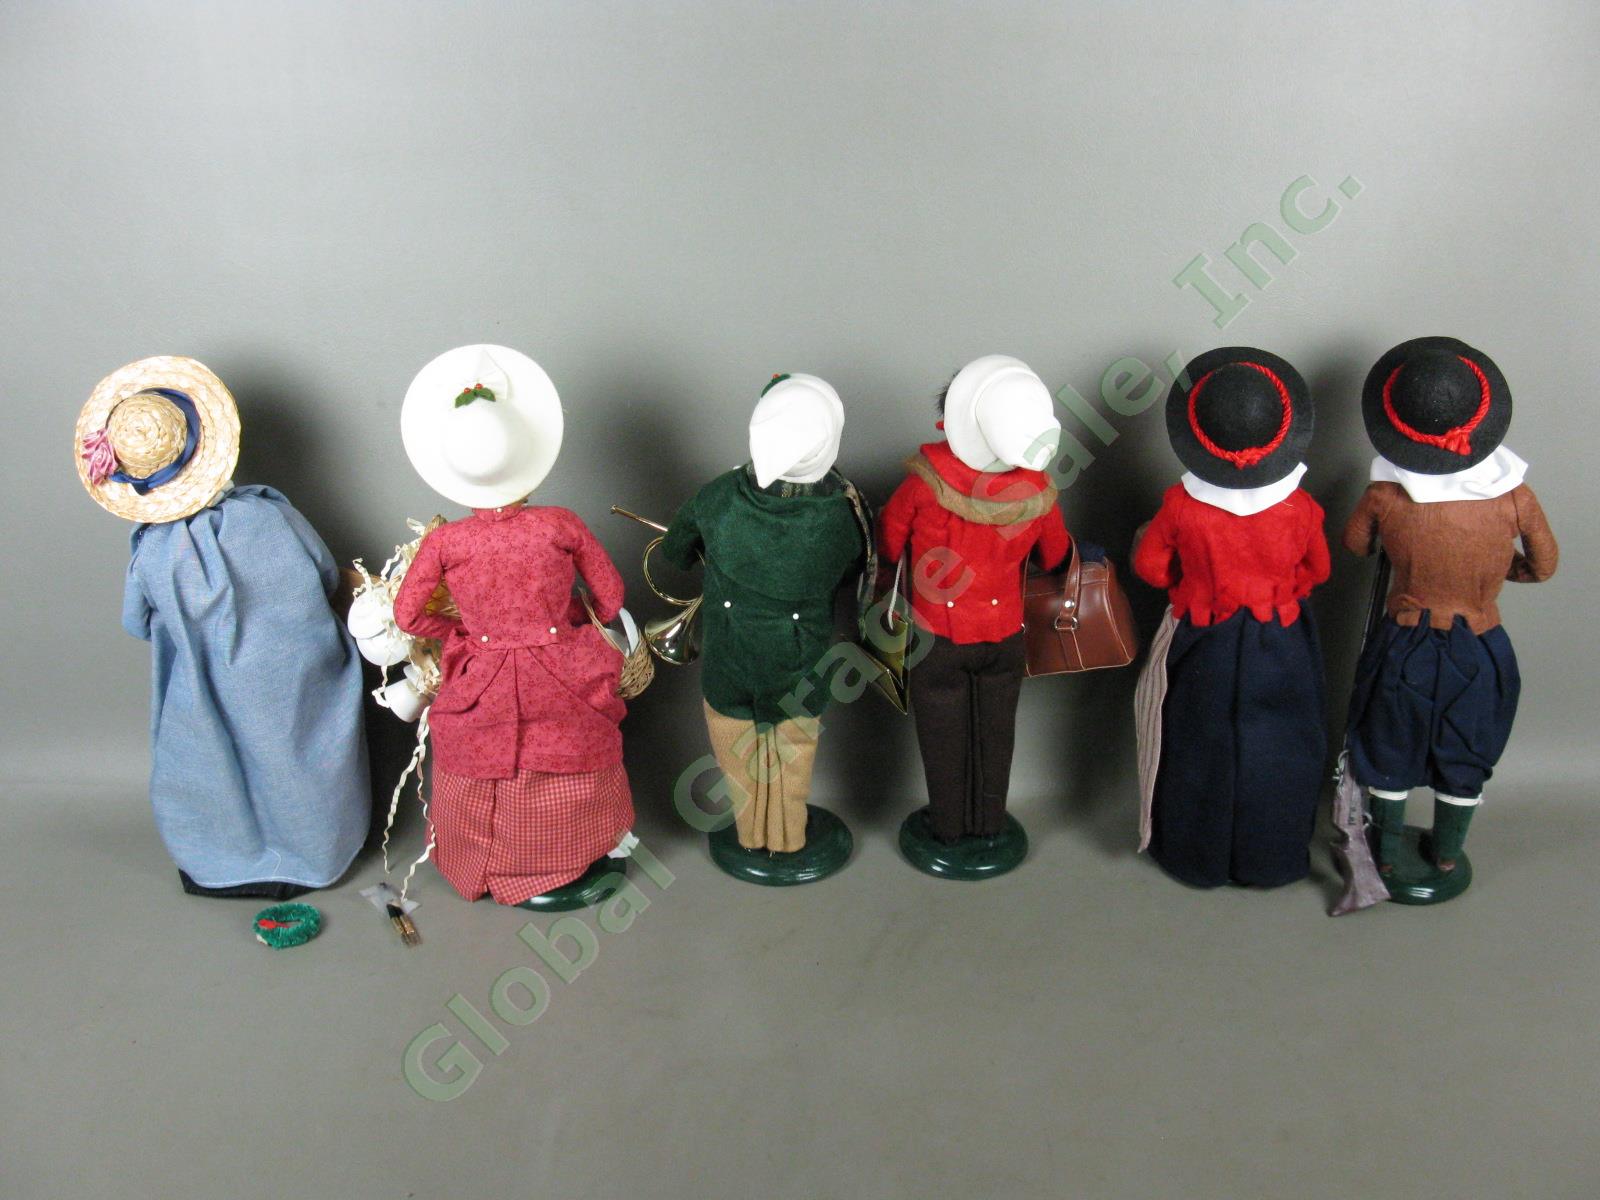 6 Vtg Byers Choice Caroler Man Woman Figurine Figure Collection Lot 1998-2000 NR 3